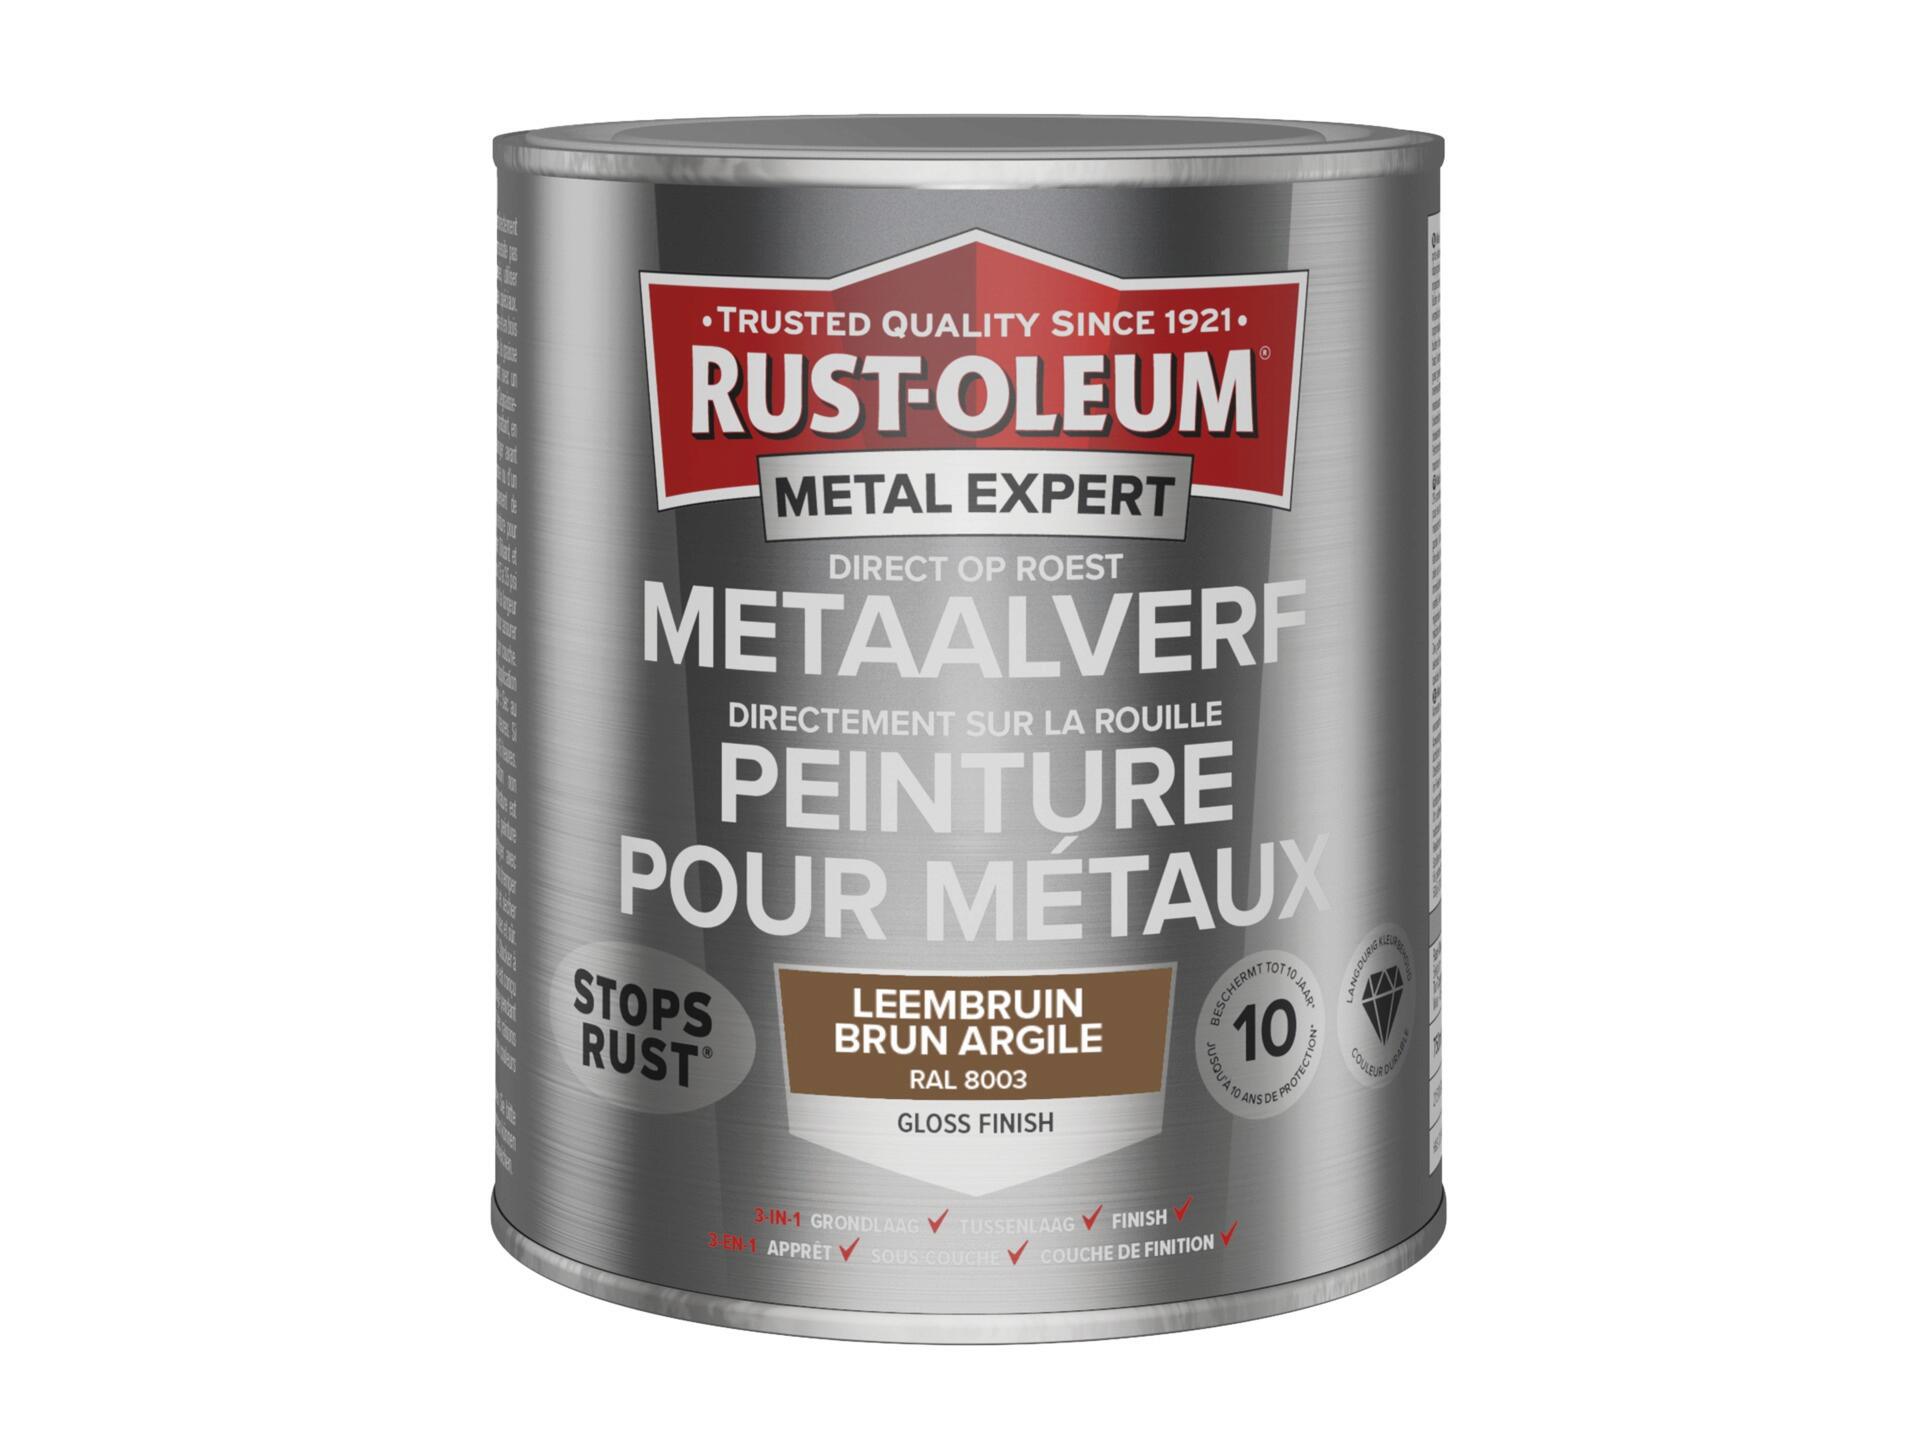 Rust-oleum Metal Expert peinture pour métaux brillant 750ml brun argile